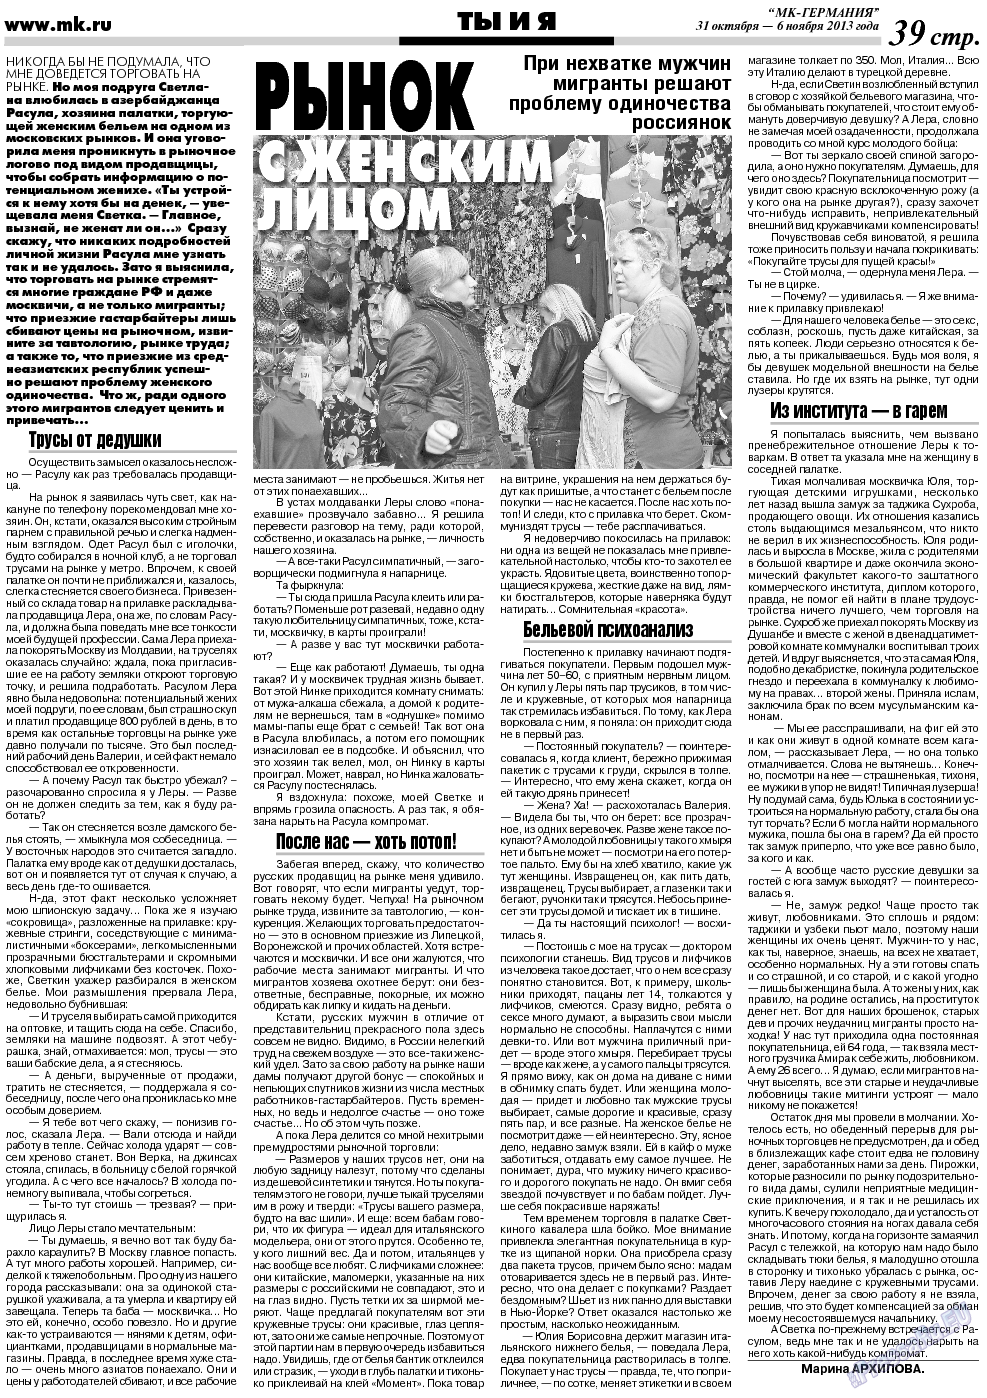 МК-Германия, газета. 2013 №44 стр.39